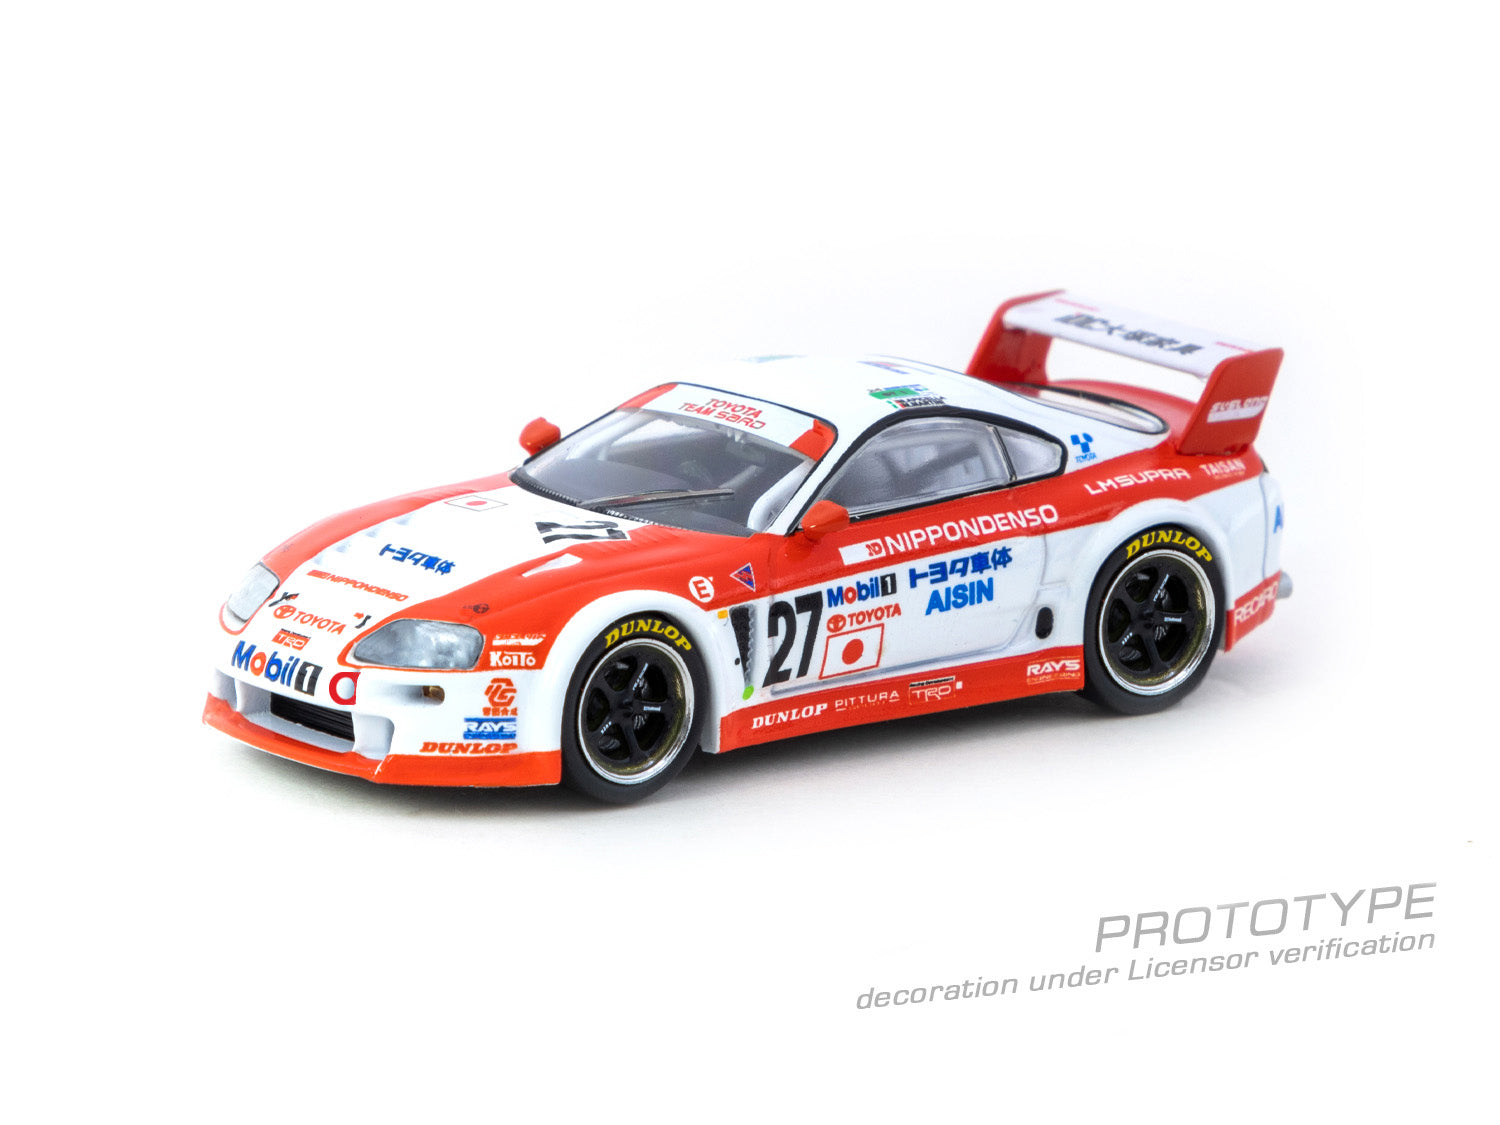 Tarmacworks 1:64 Scale Toyota Supra GT, 24h of Le Mans 1995, J Krosnoff / M Apicella / M Martini Tarmacworks